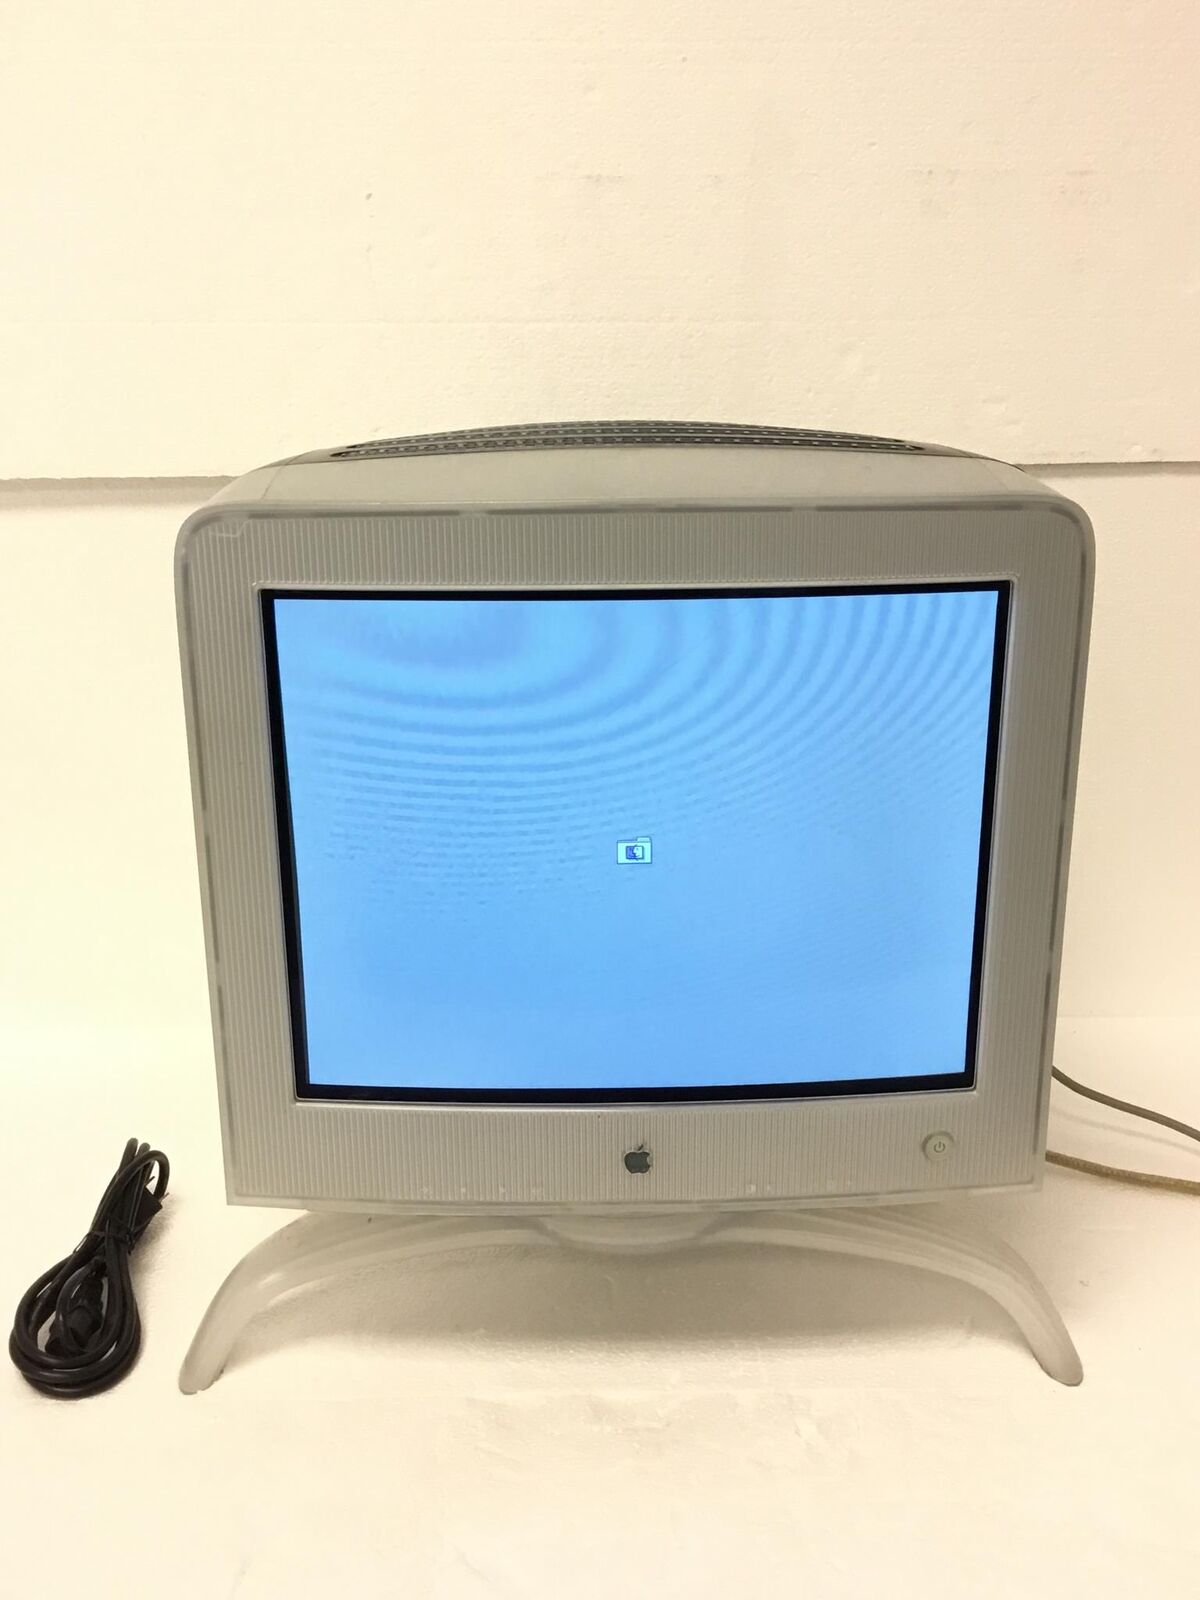 Apple M6496 Studio Display Monitor Used Working  Great Deal